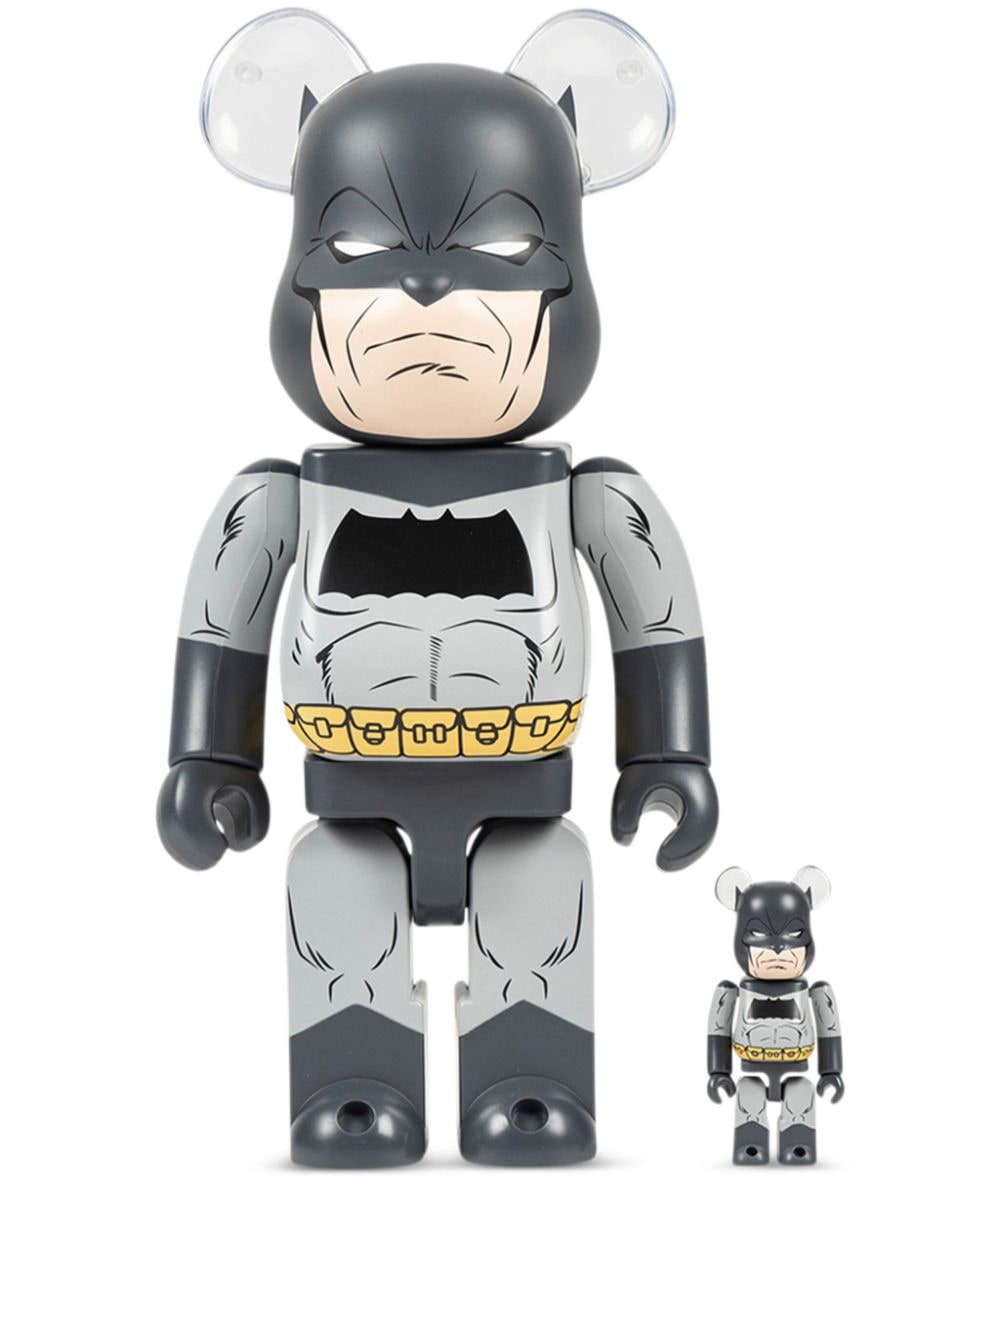 Medicom Toy X Batman The Dark Knight Returns Be@rbrick 100% And 400% Figure Set In Gray